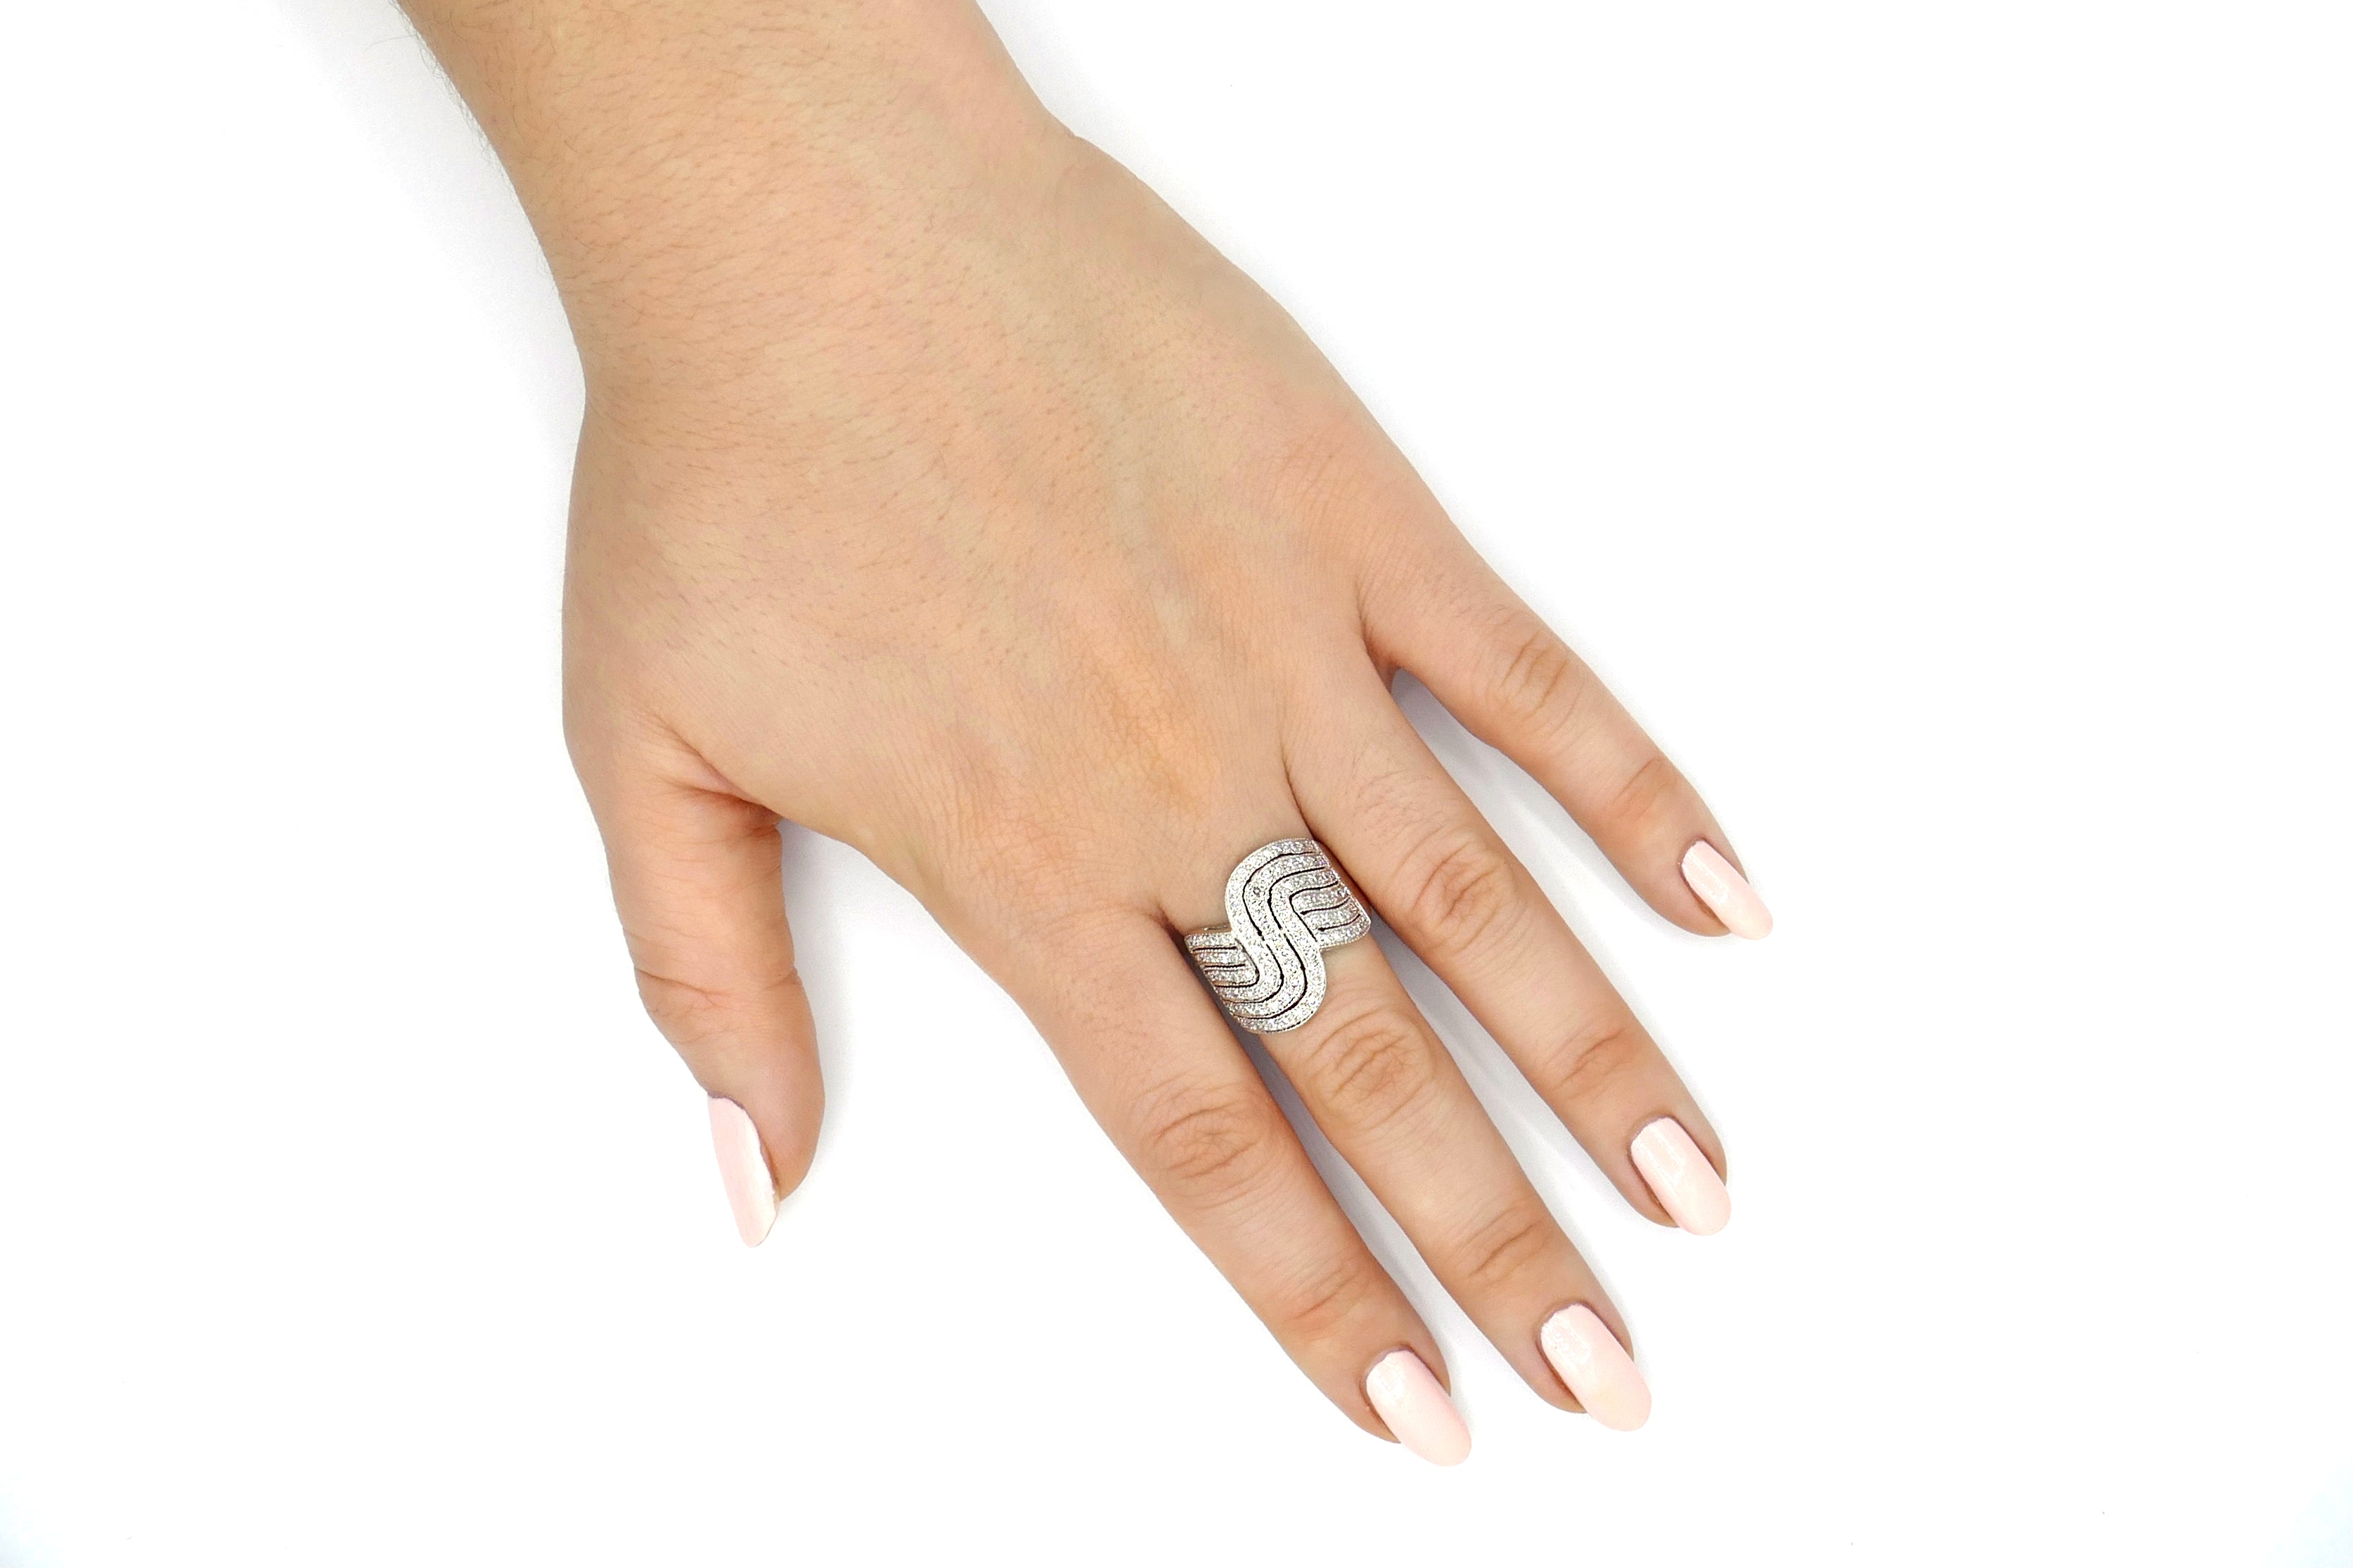 Asymmetrical Wave White Gold Diamond Ring